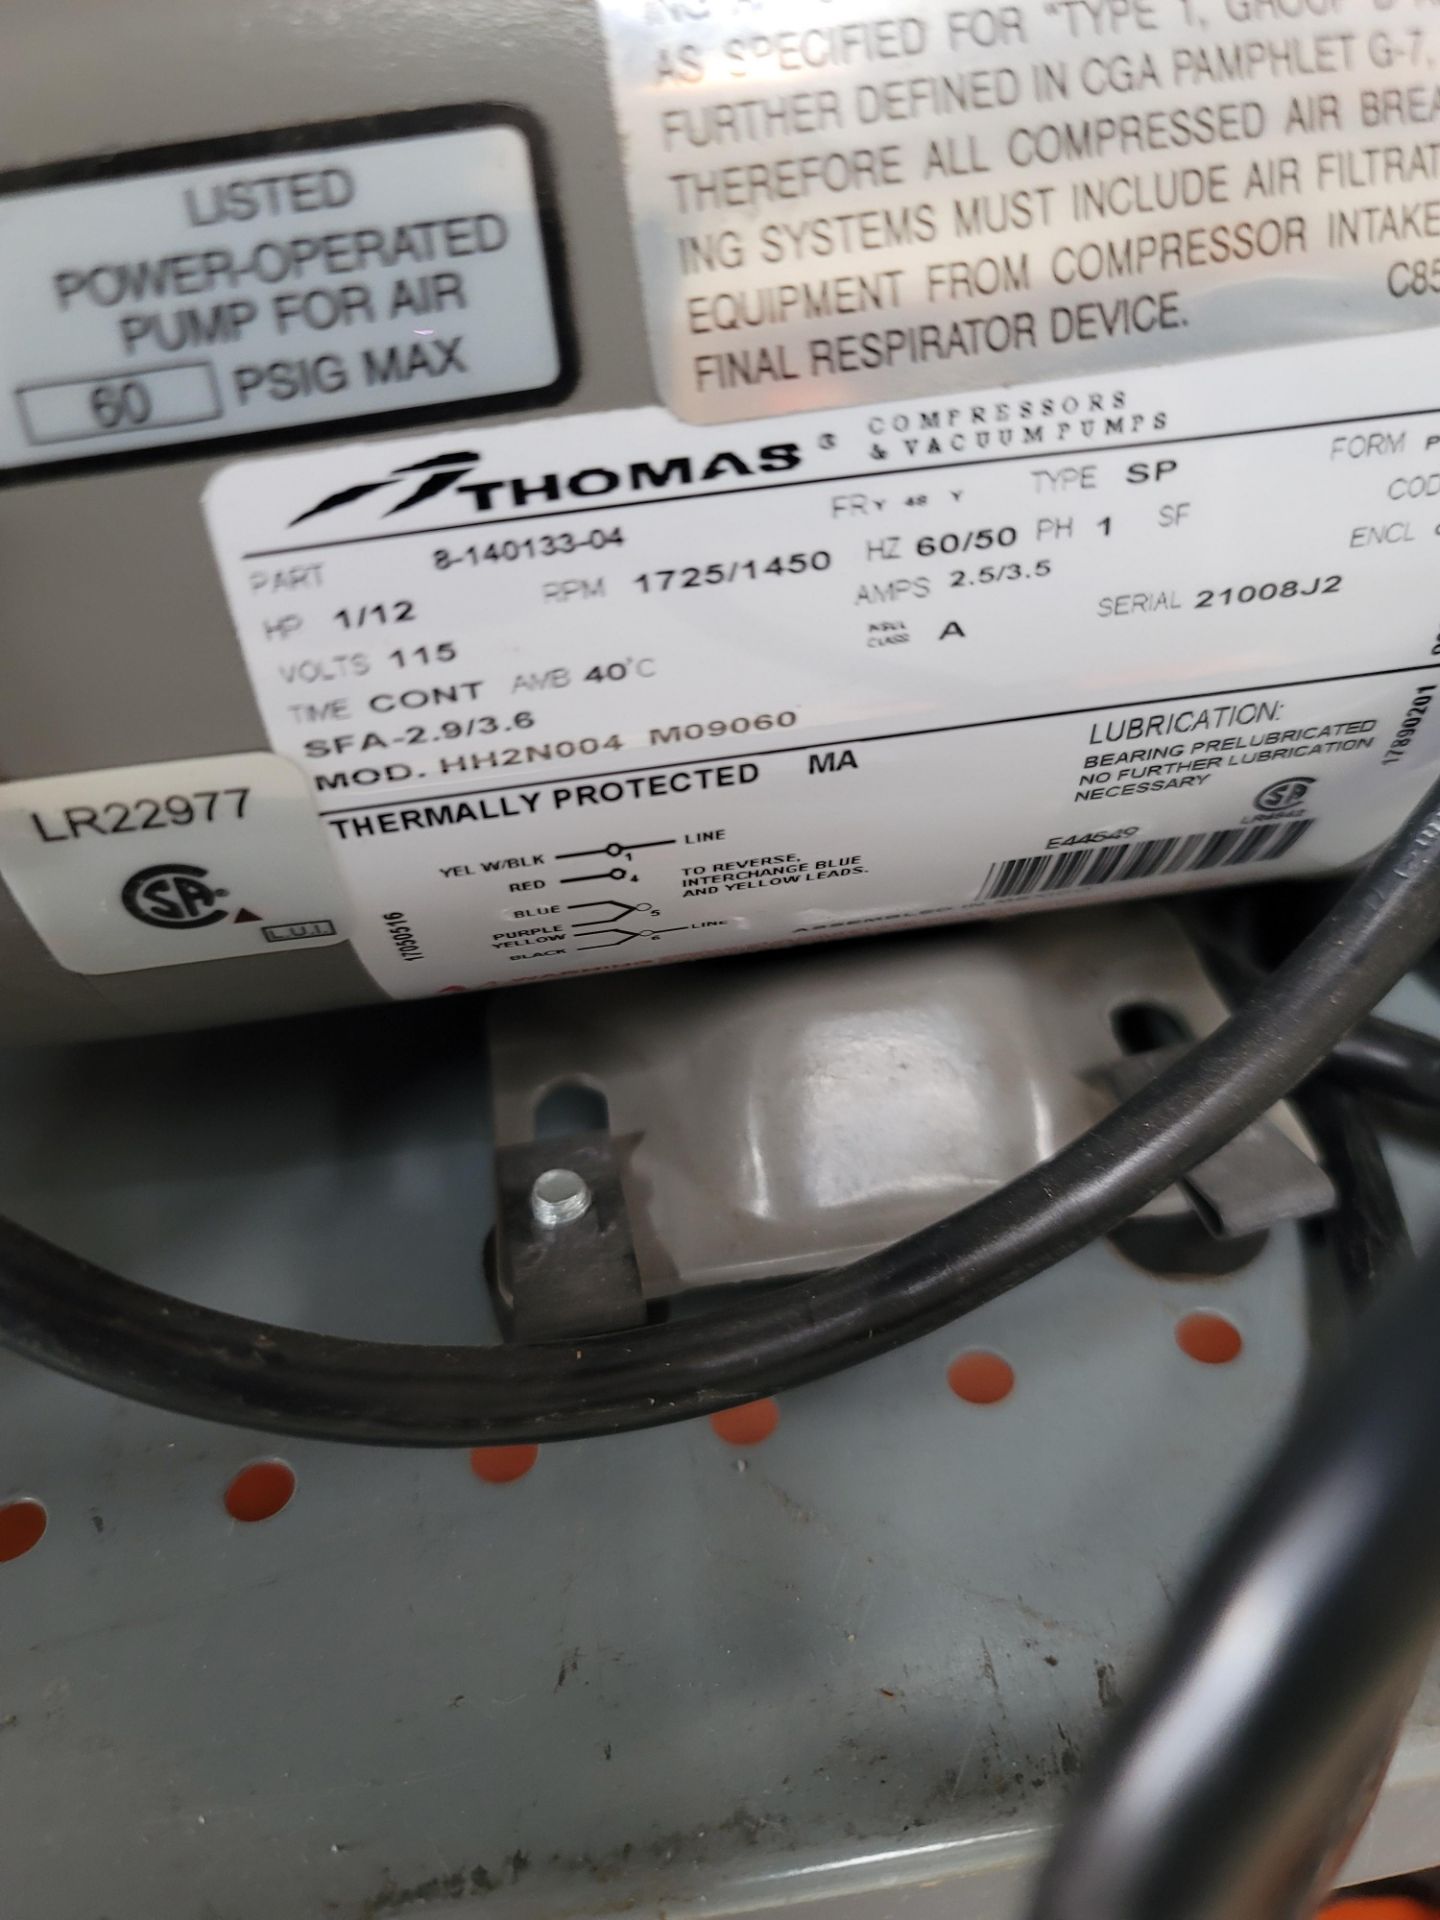 THOMAS LGH-106 COMPRESSOR PUMP, 1/12 HP, 115V, 1725 RPM, 1/4" PORT, NEW - Image 2 of 2